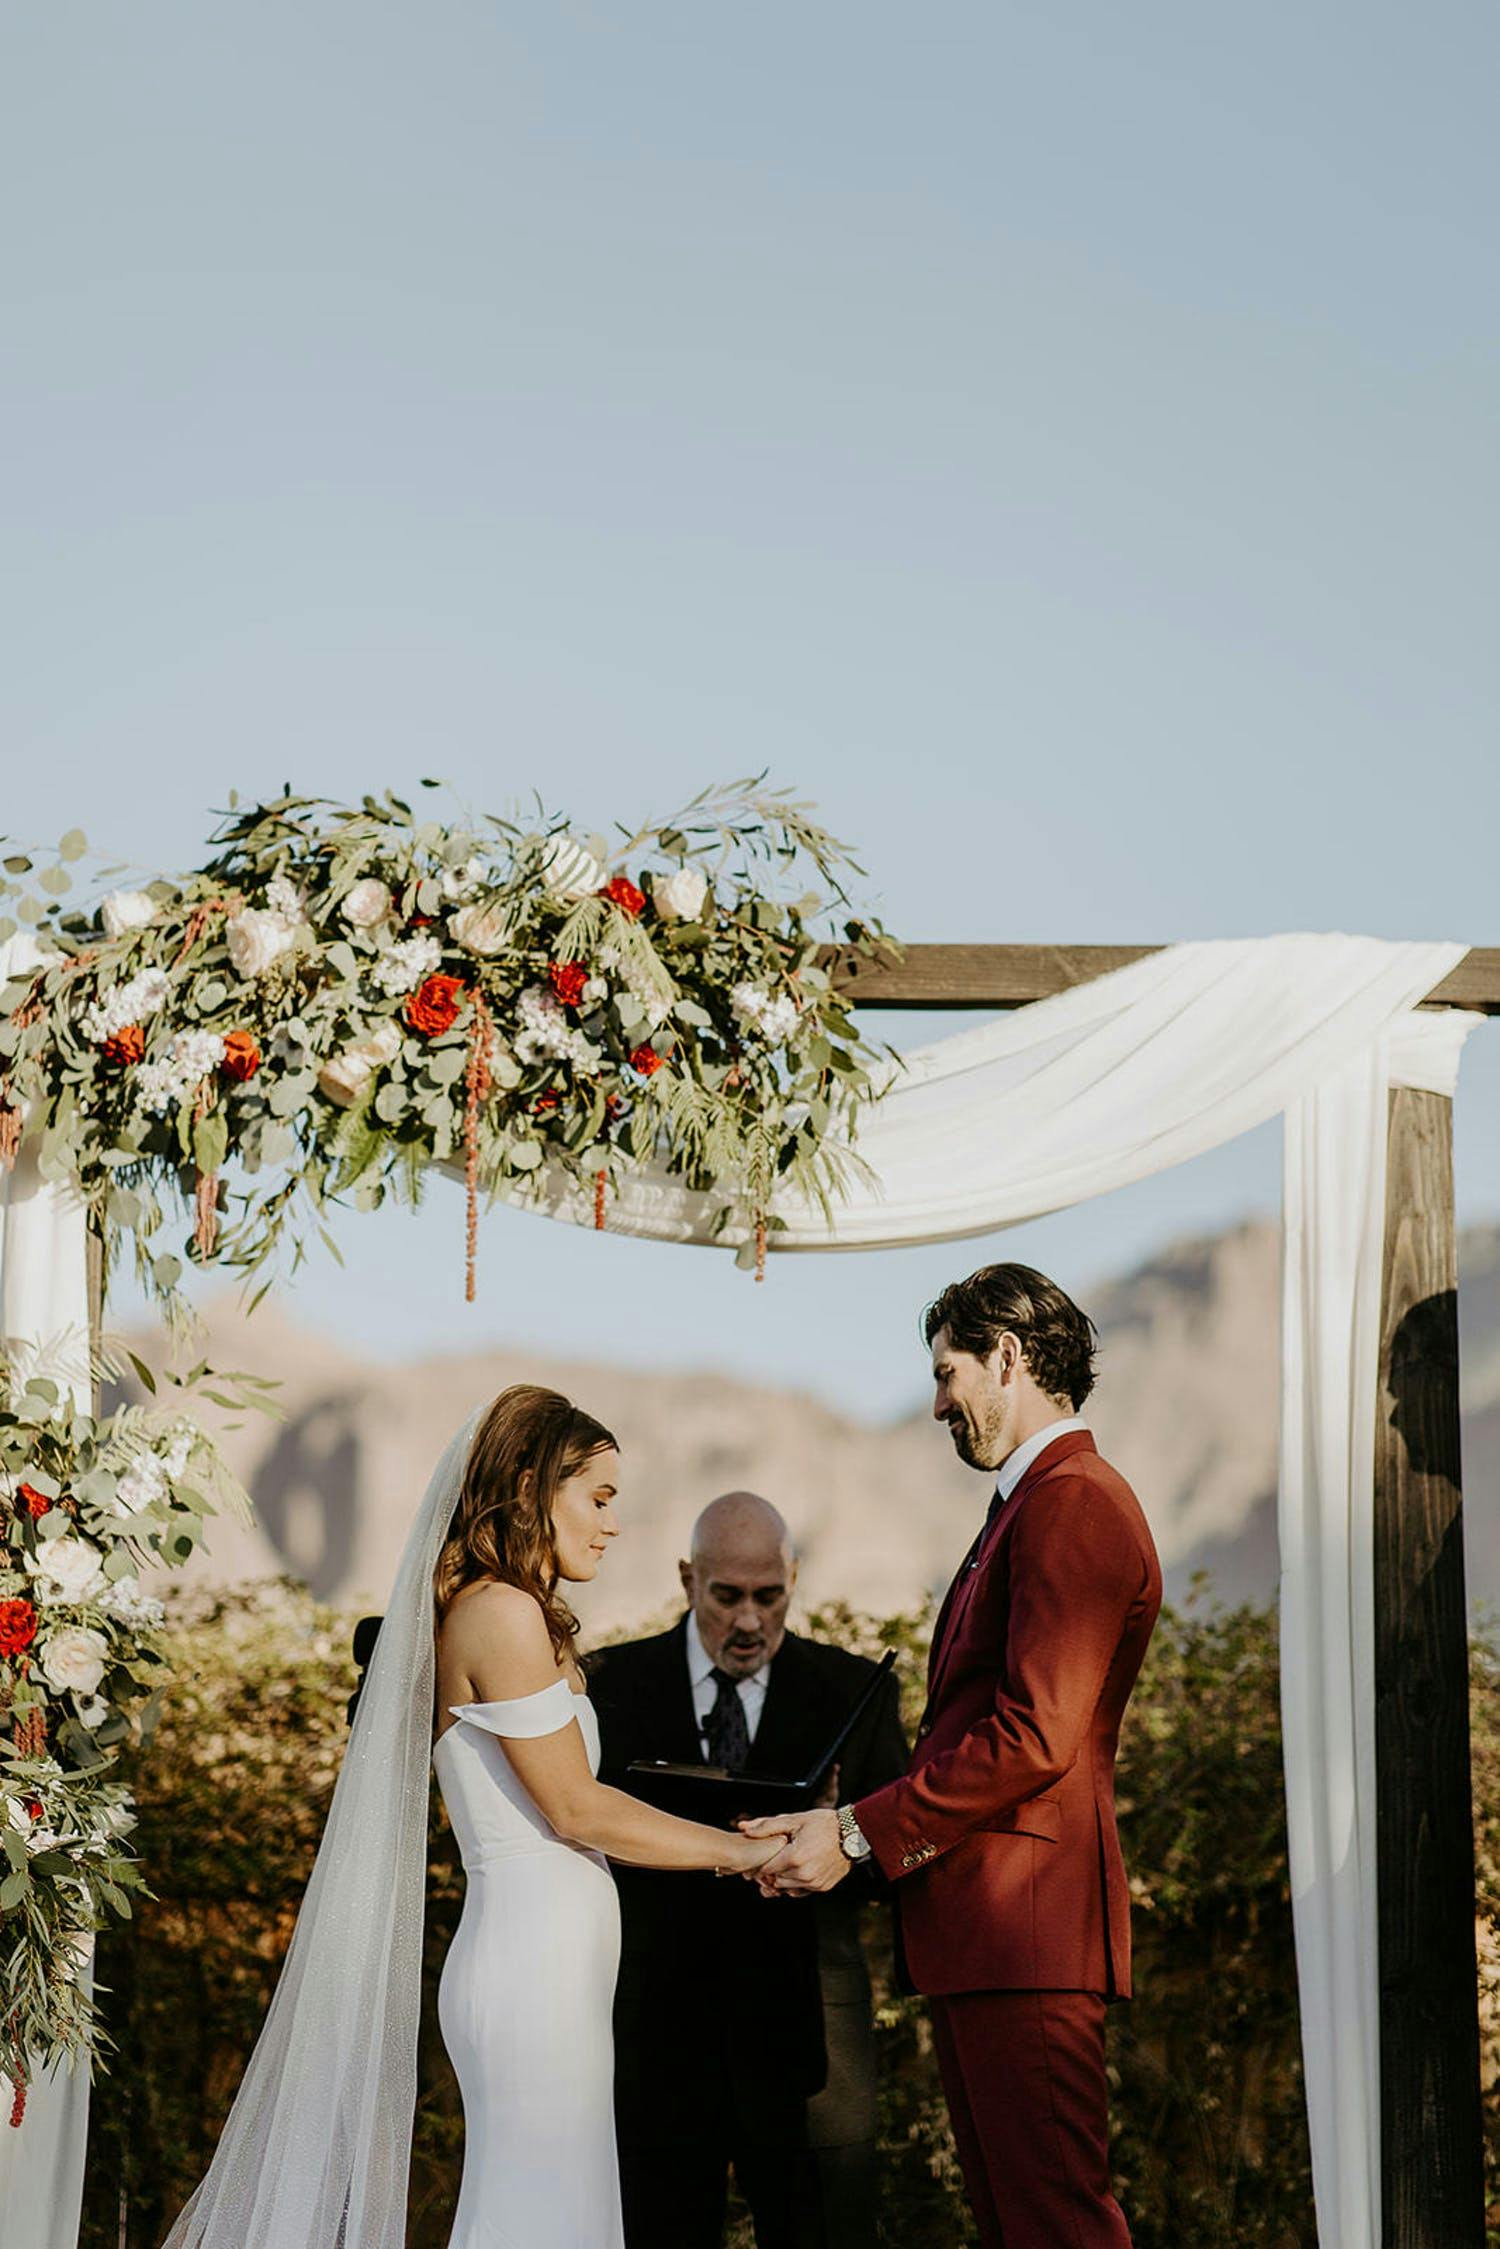 Desert wedding nuptials | PartySlate